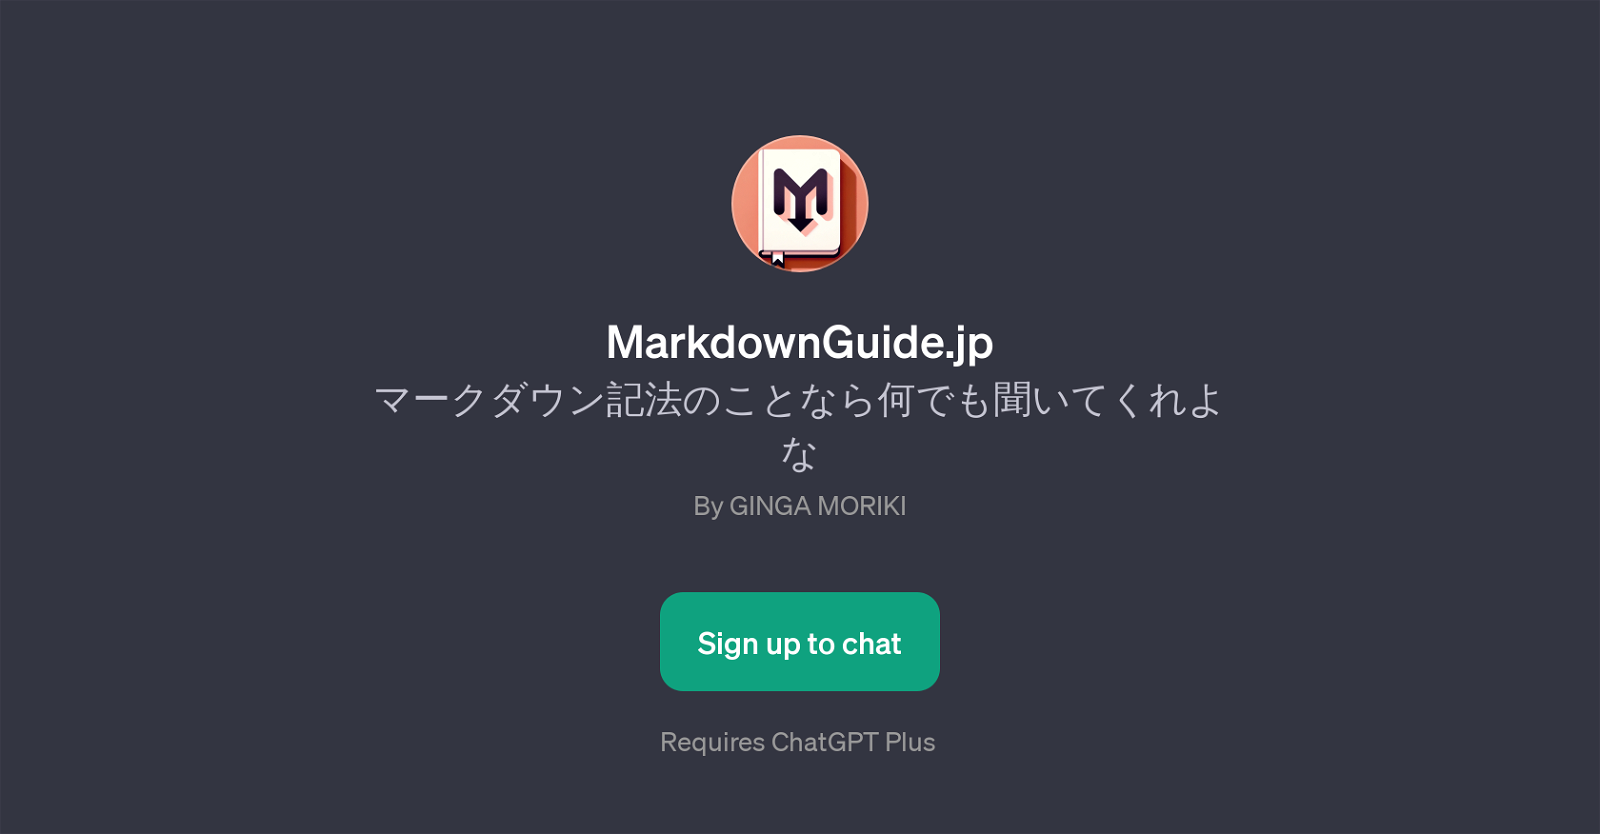 MarkdownGuide.jp website